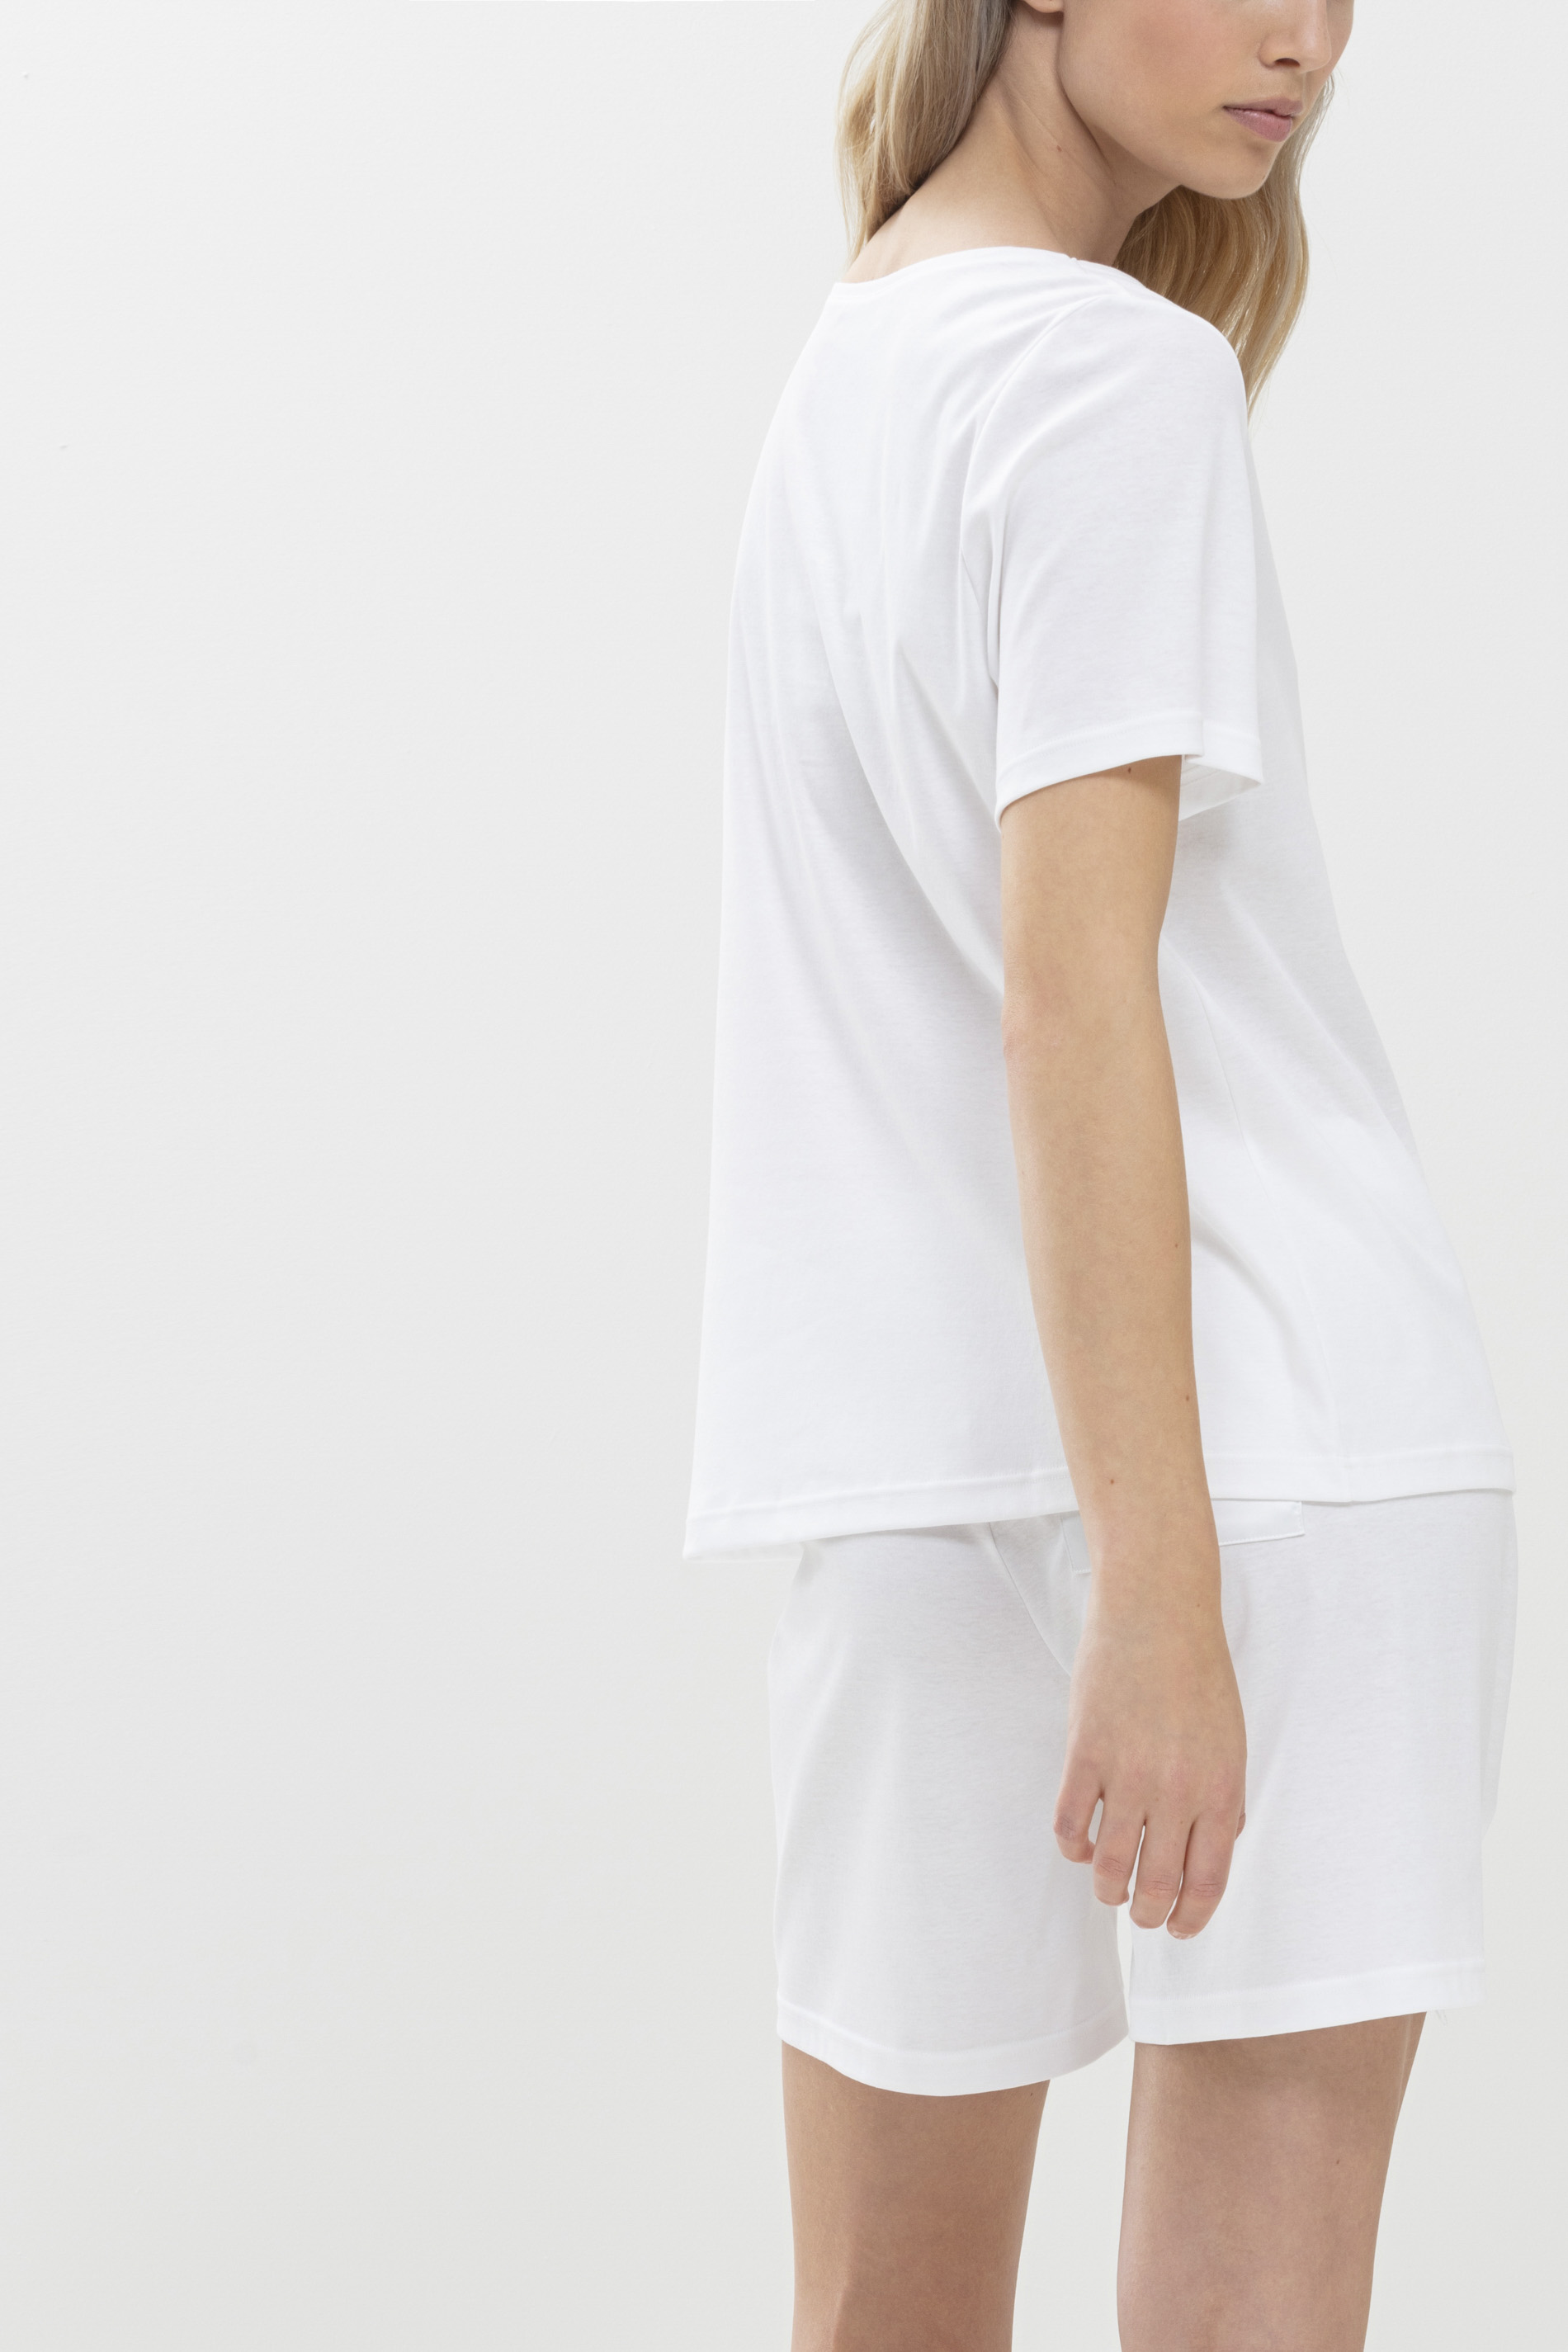 Shirt White Serie Sleepsation Rear View | mey®